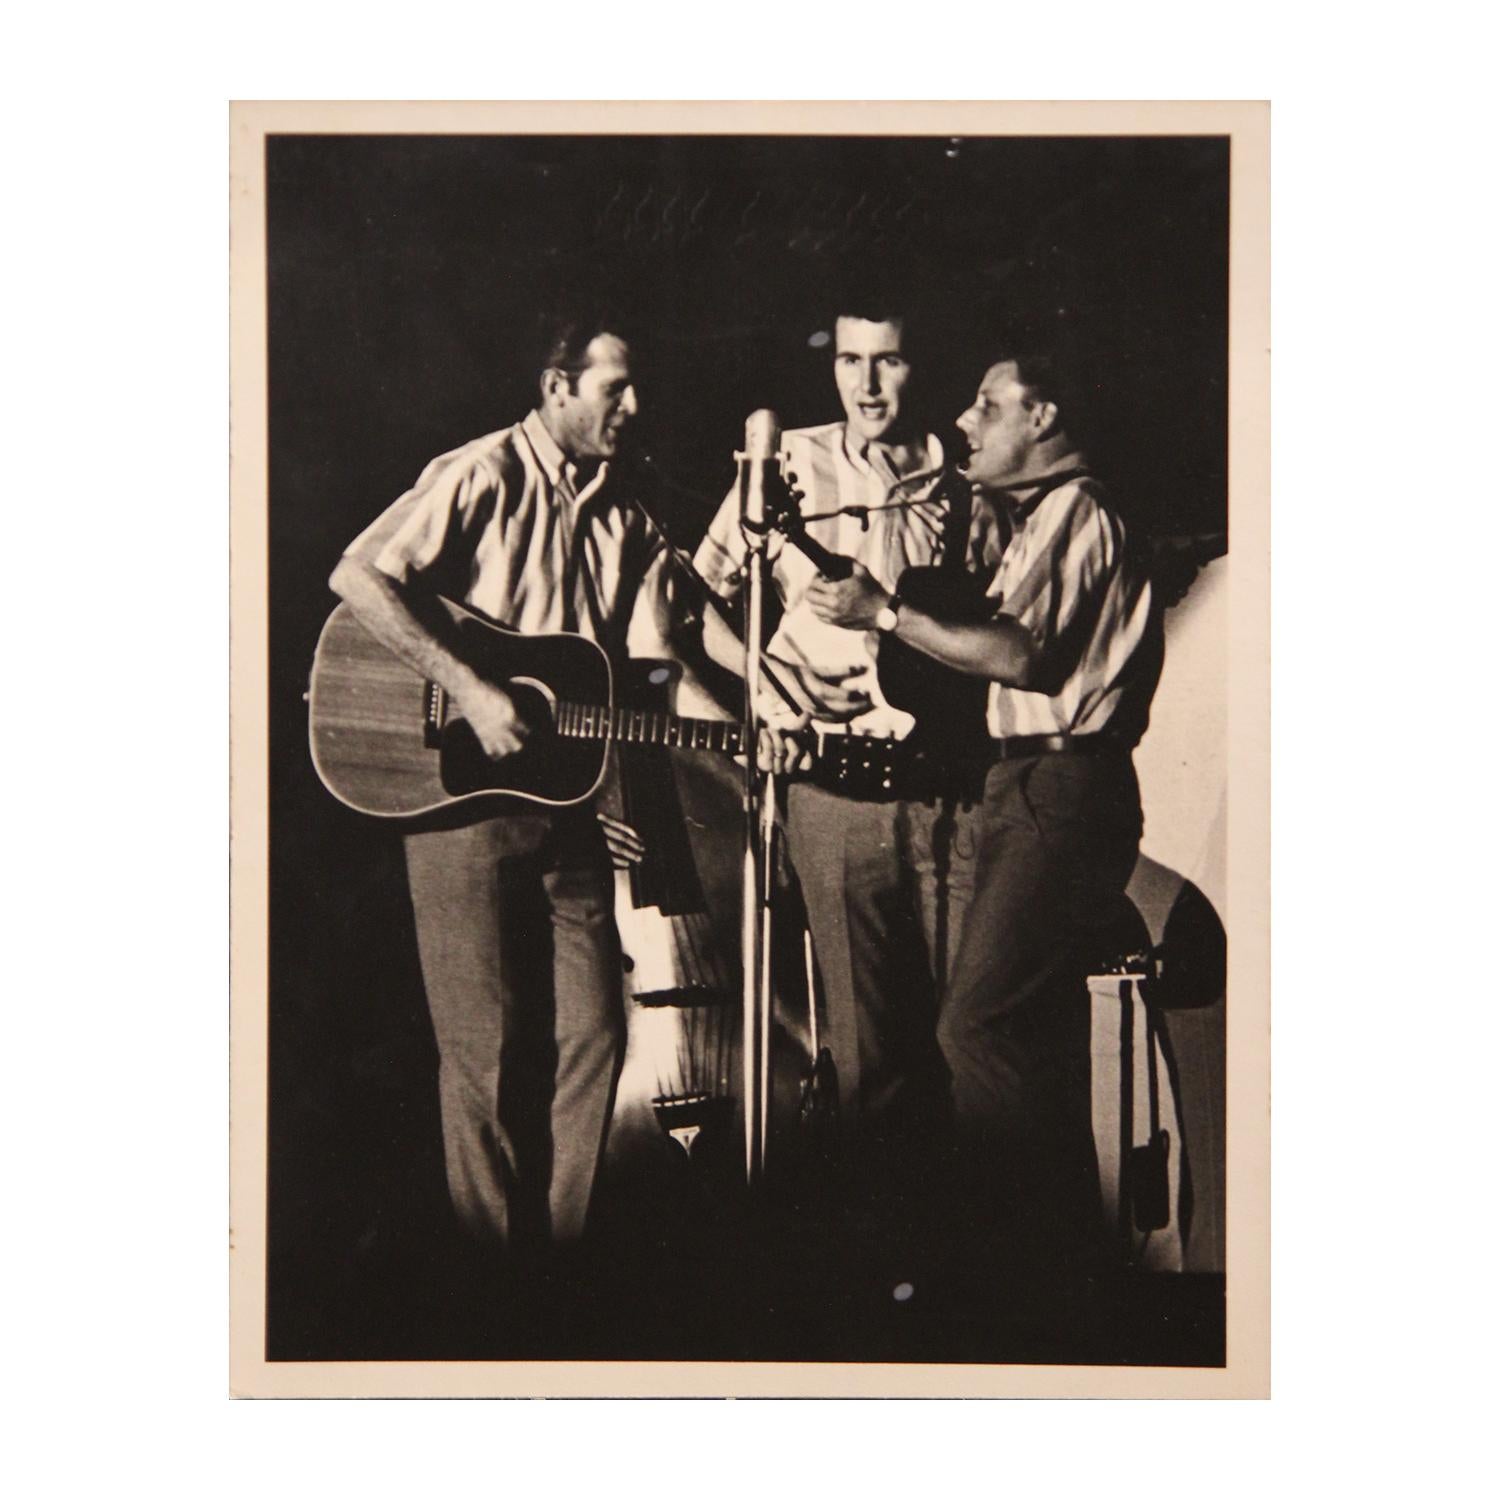 "Kingston Trio" Fotografía icónica de la música folk estadounidense